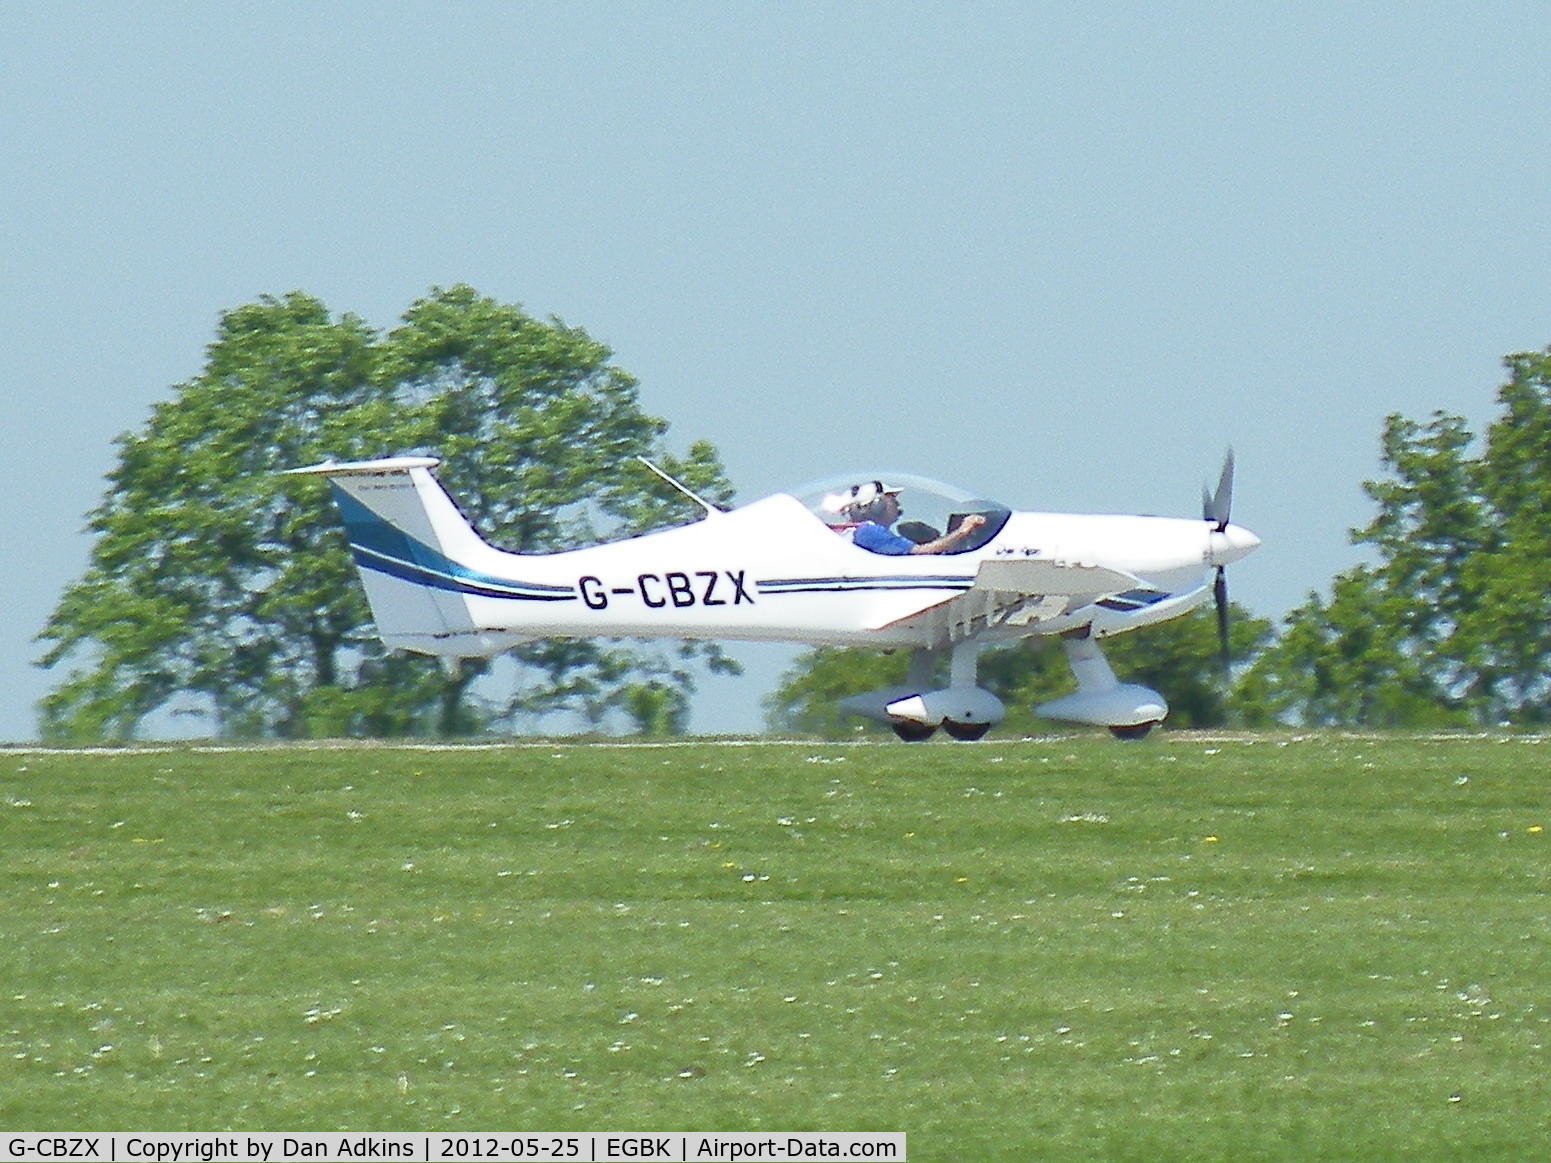 G-CBZX, 2005 Dyn'Aero MCR-01 ULC Banbi C/N PFA 301B-13957, G-CBZX at the AeroExpo event at Sywell Aerodrome, Northamptonshire, UK, 25th May 2012.